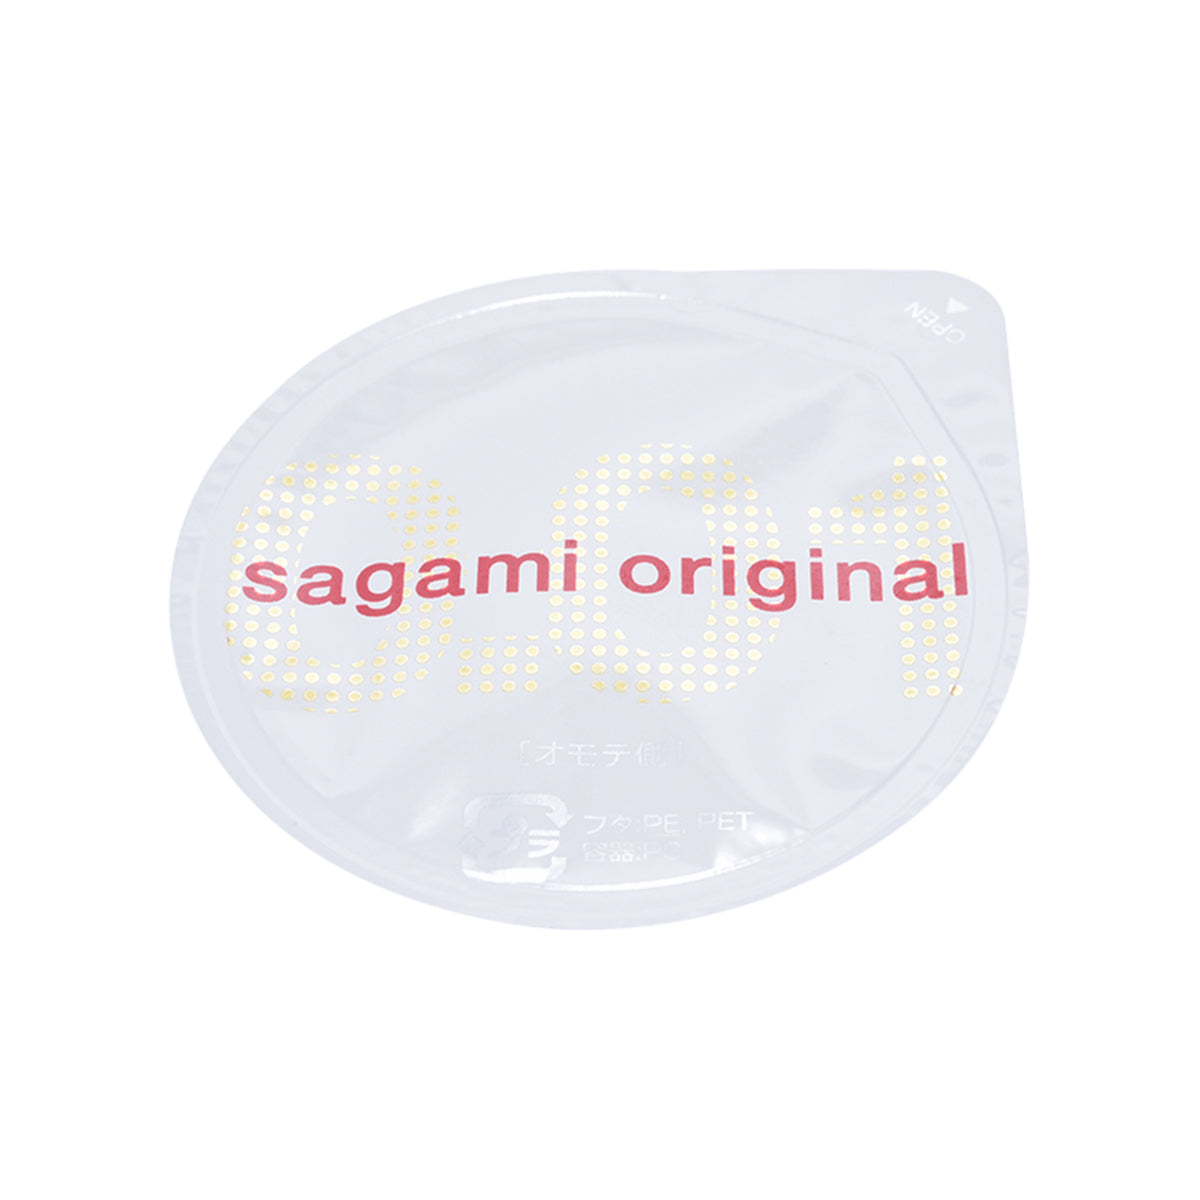 japanese-thin-condom-packaging